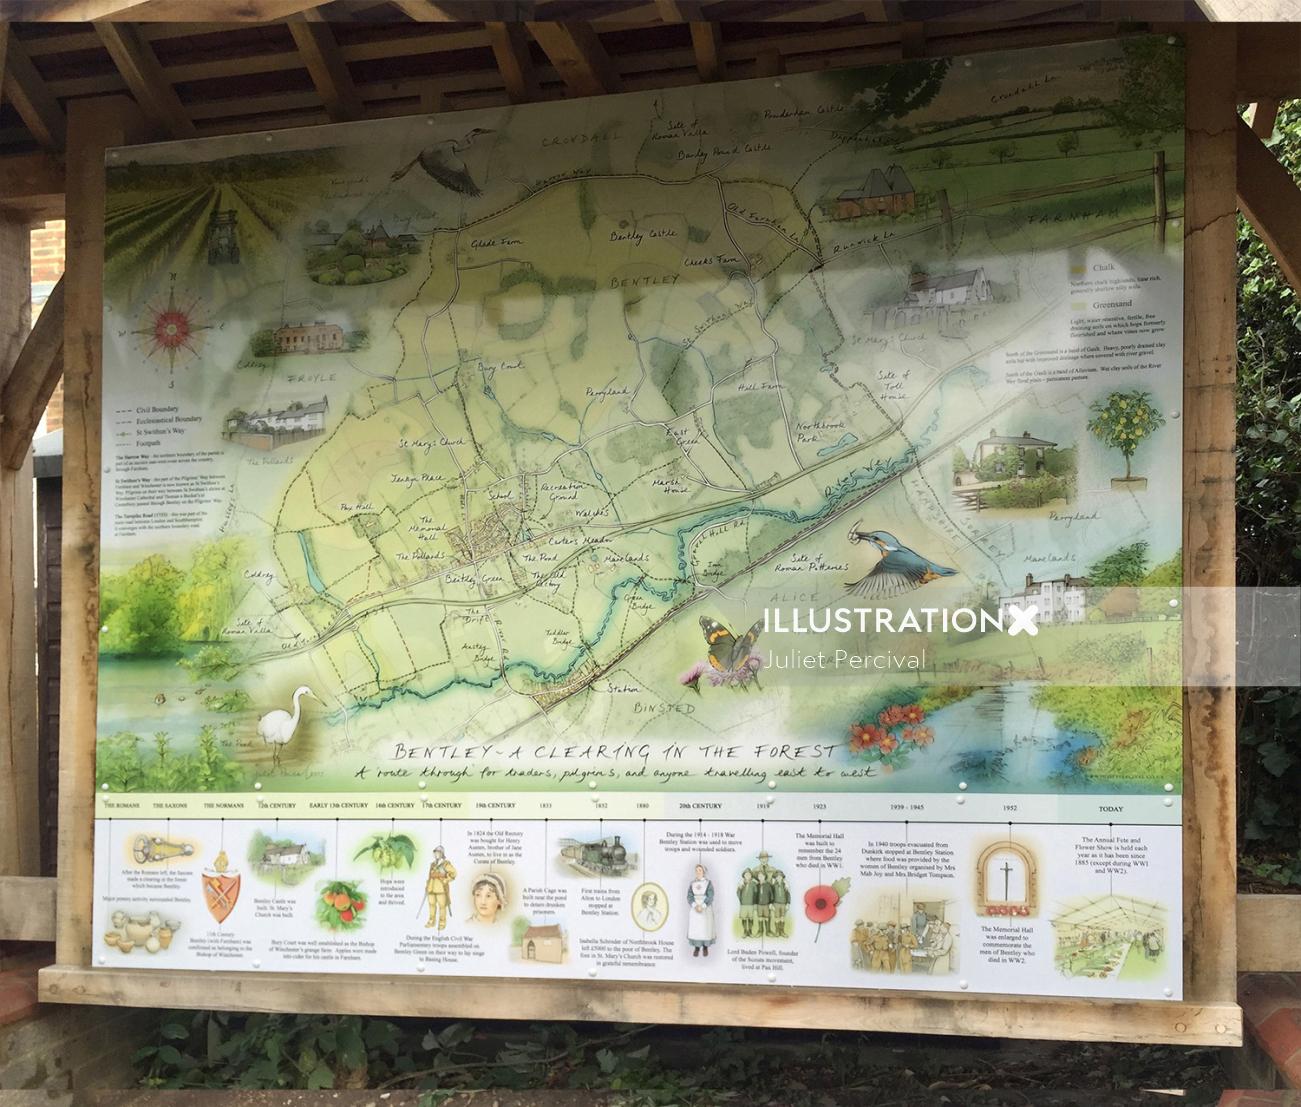 outdoor panel, heritage interpretation, giant map, historic time line, farming, wildlife sketches, t